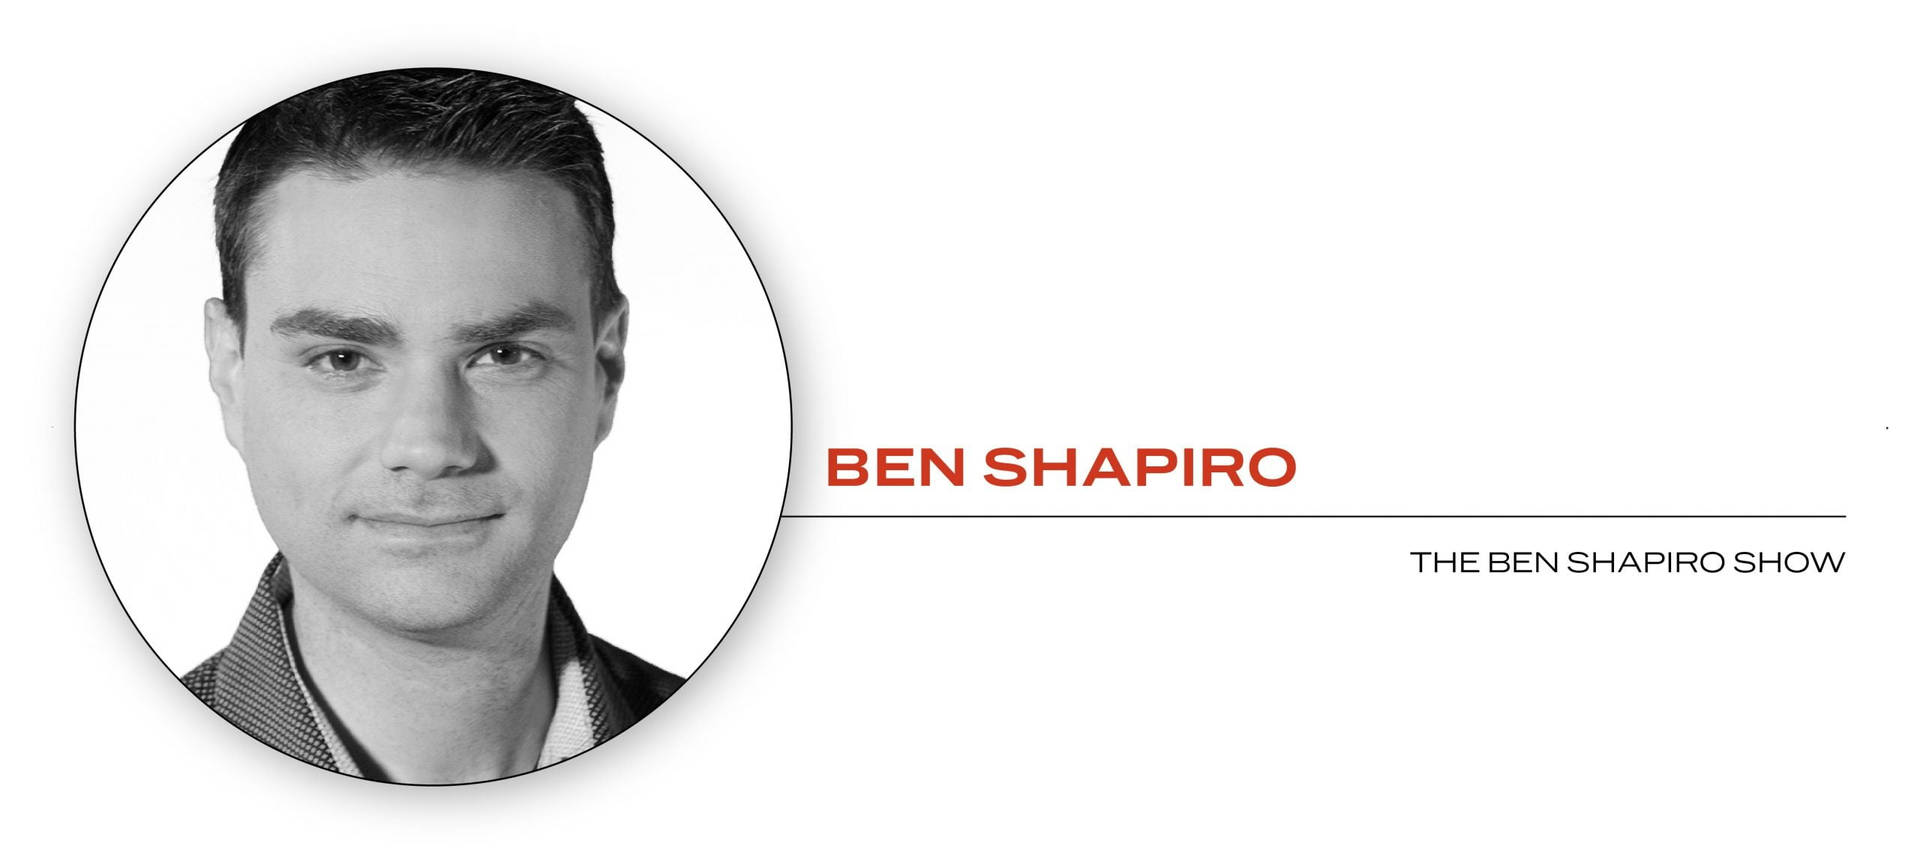 The Ben Shapiro Show Background